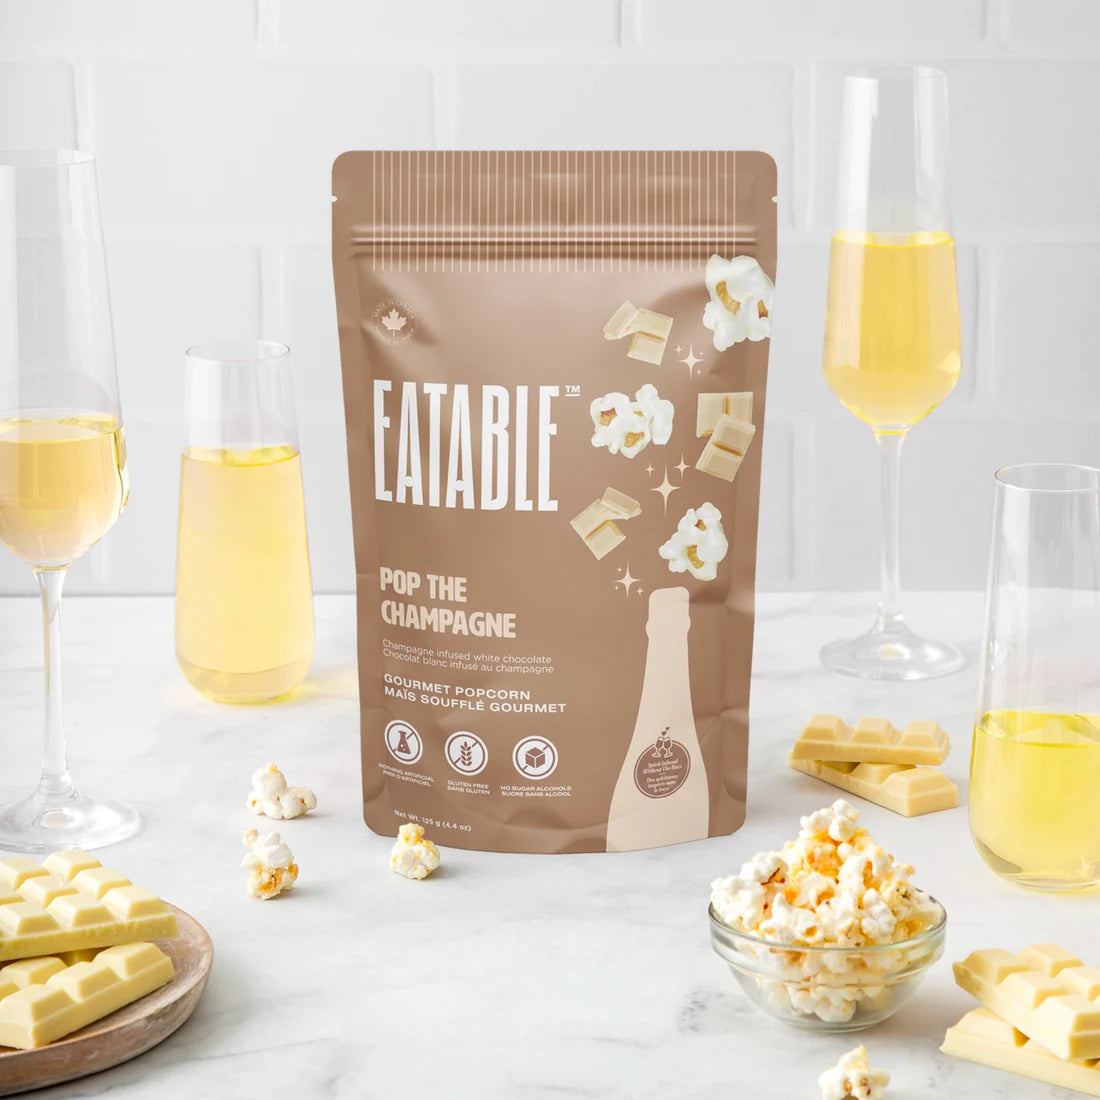 EATABLE Gourmet Popcorn - Pop the Champagne